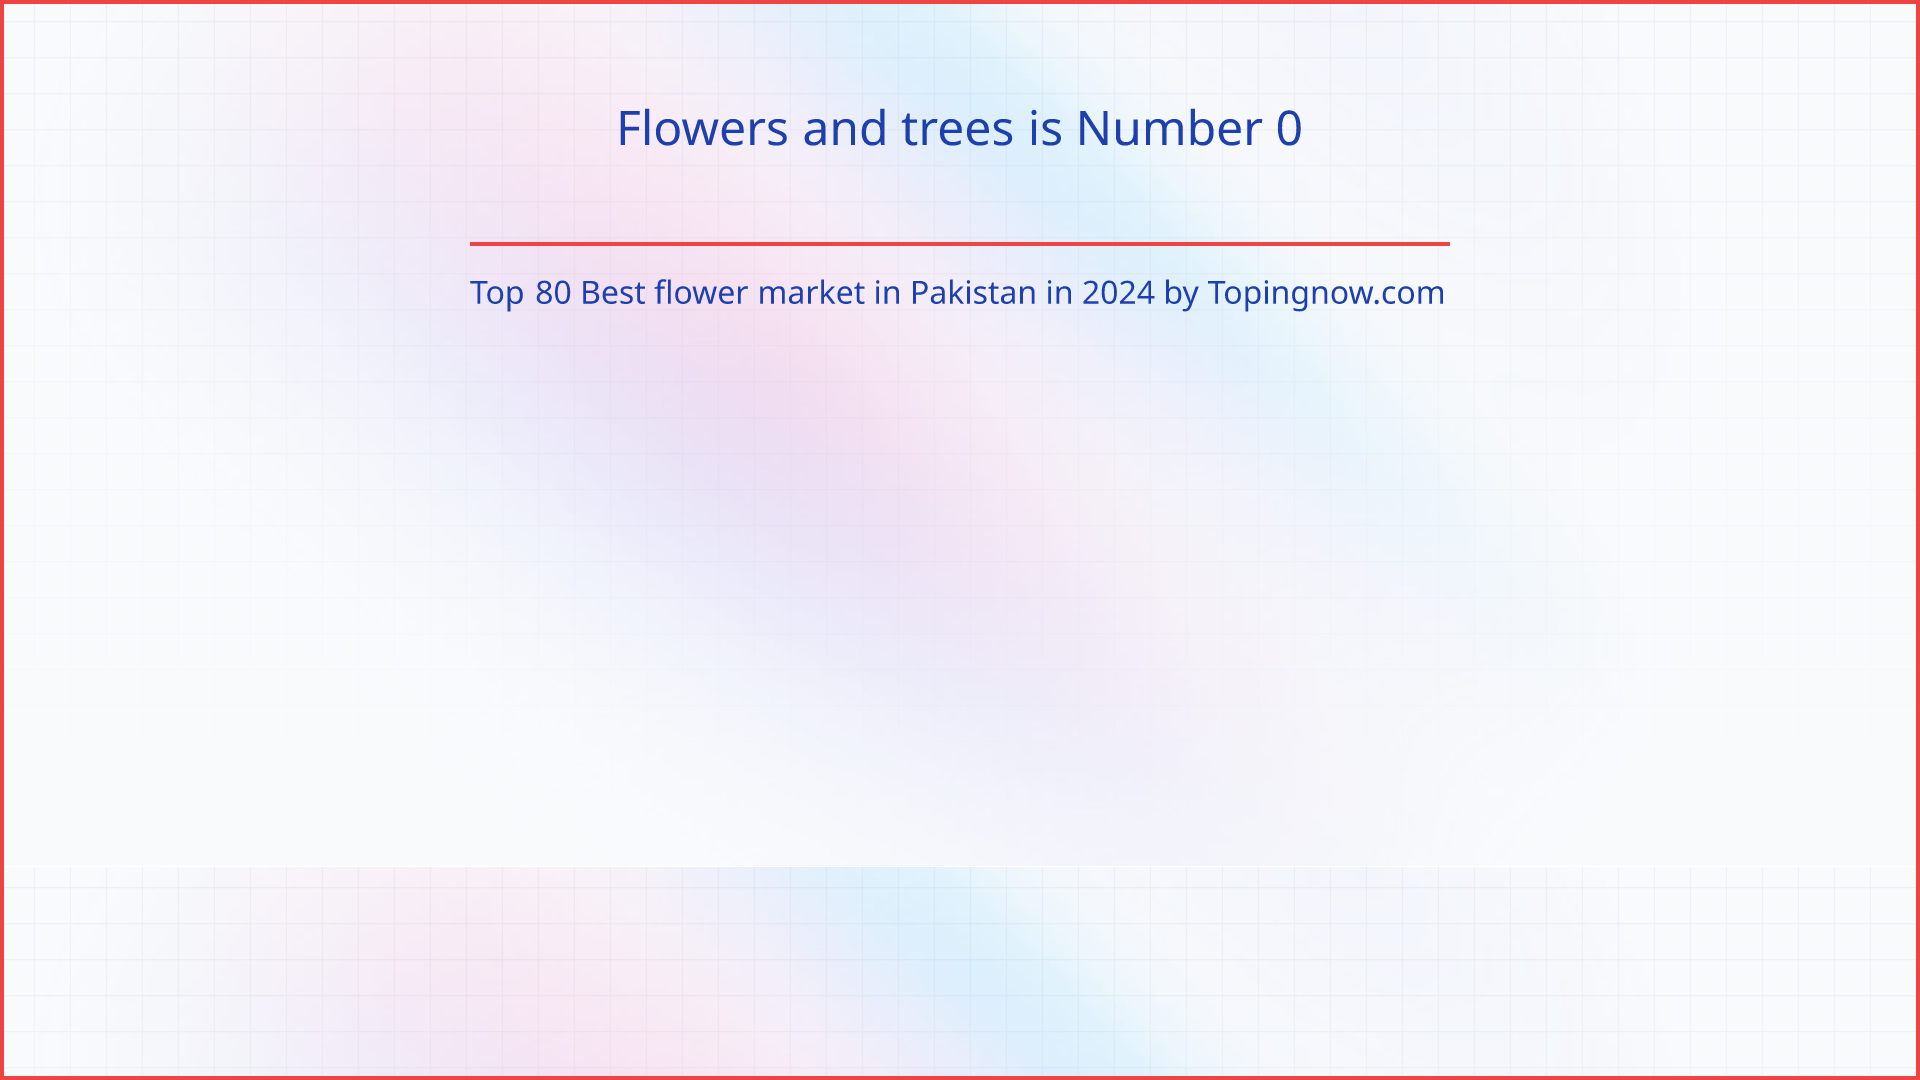 Flowers and trees: Top 80 Best flower market in Pakistan in 2024